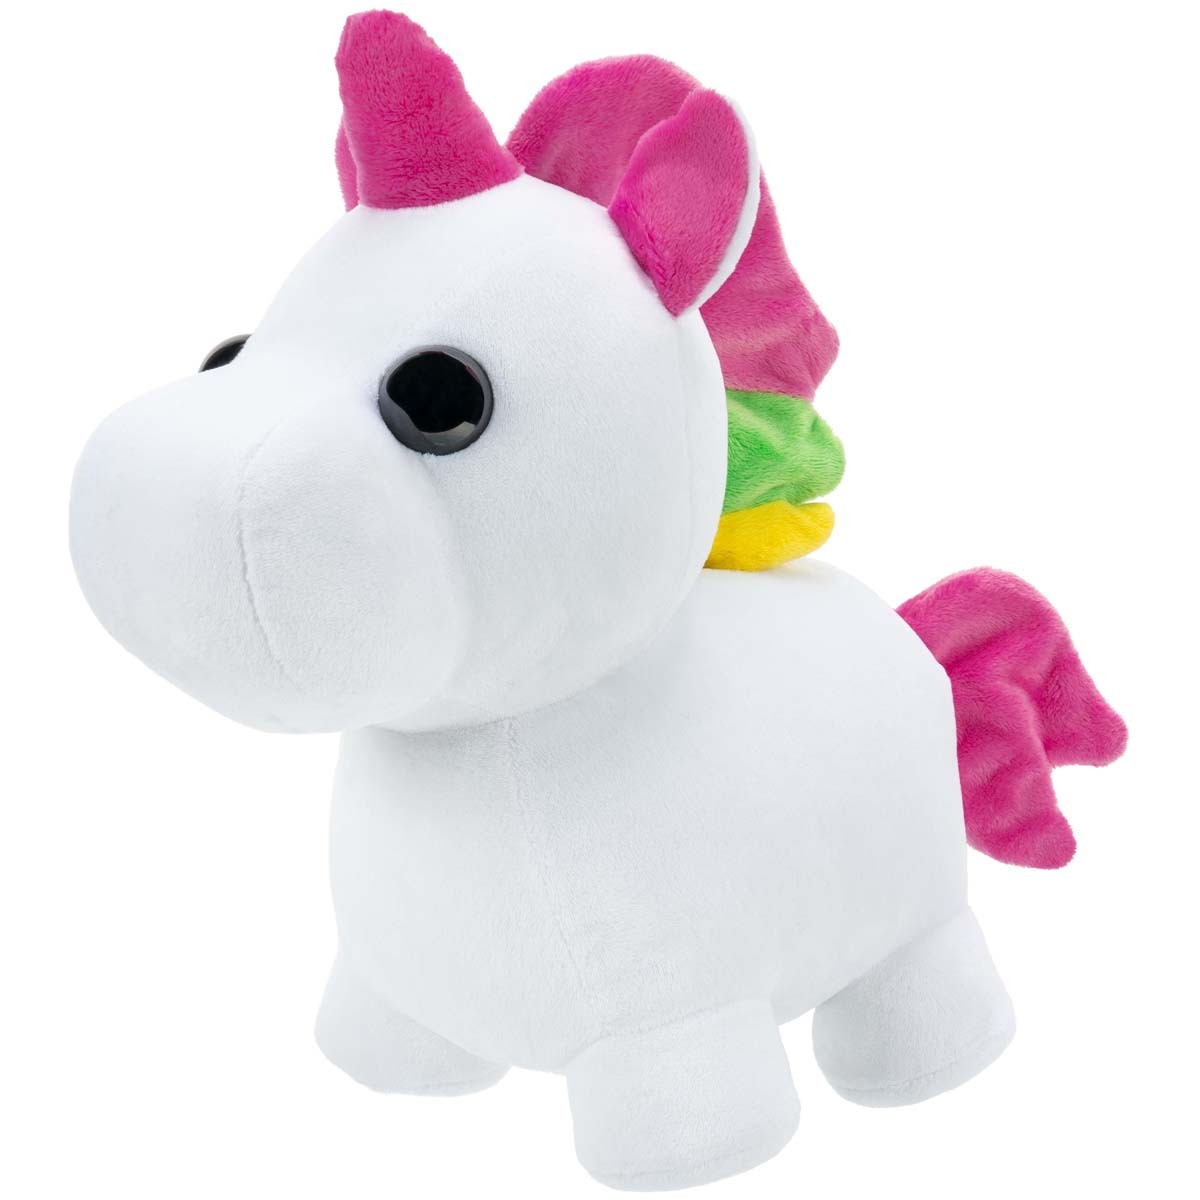 Adopt Me! 8 Collector Plush Pet Unicorn, Stuffed Animal Plush Toy 